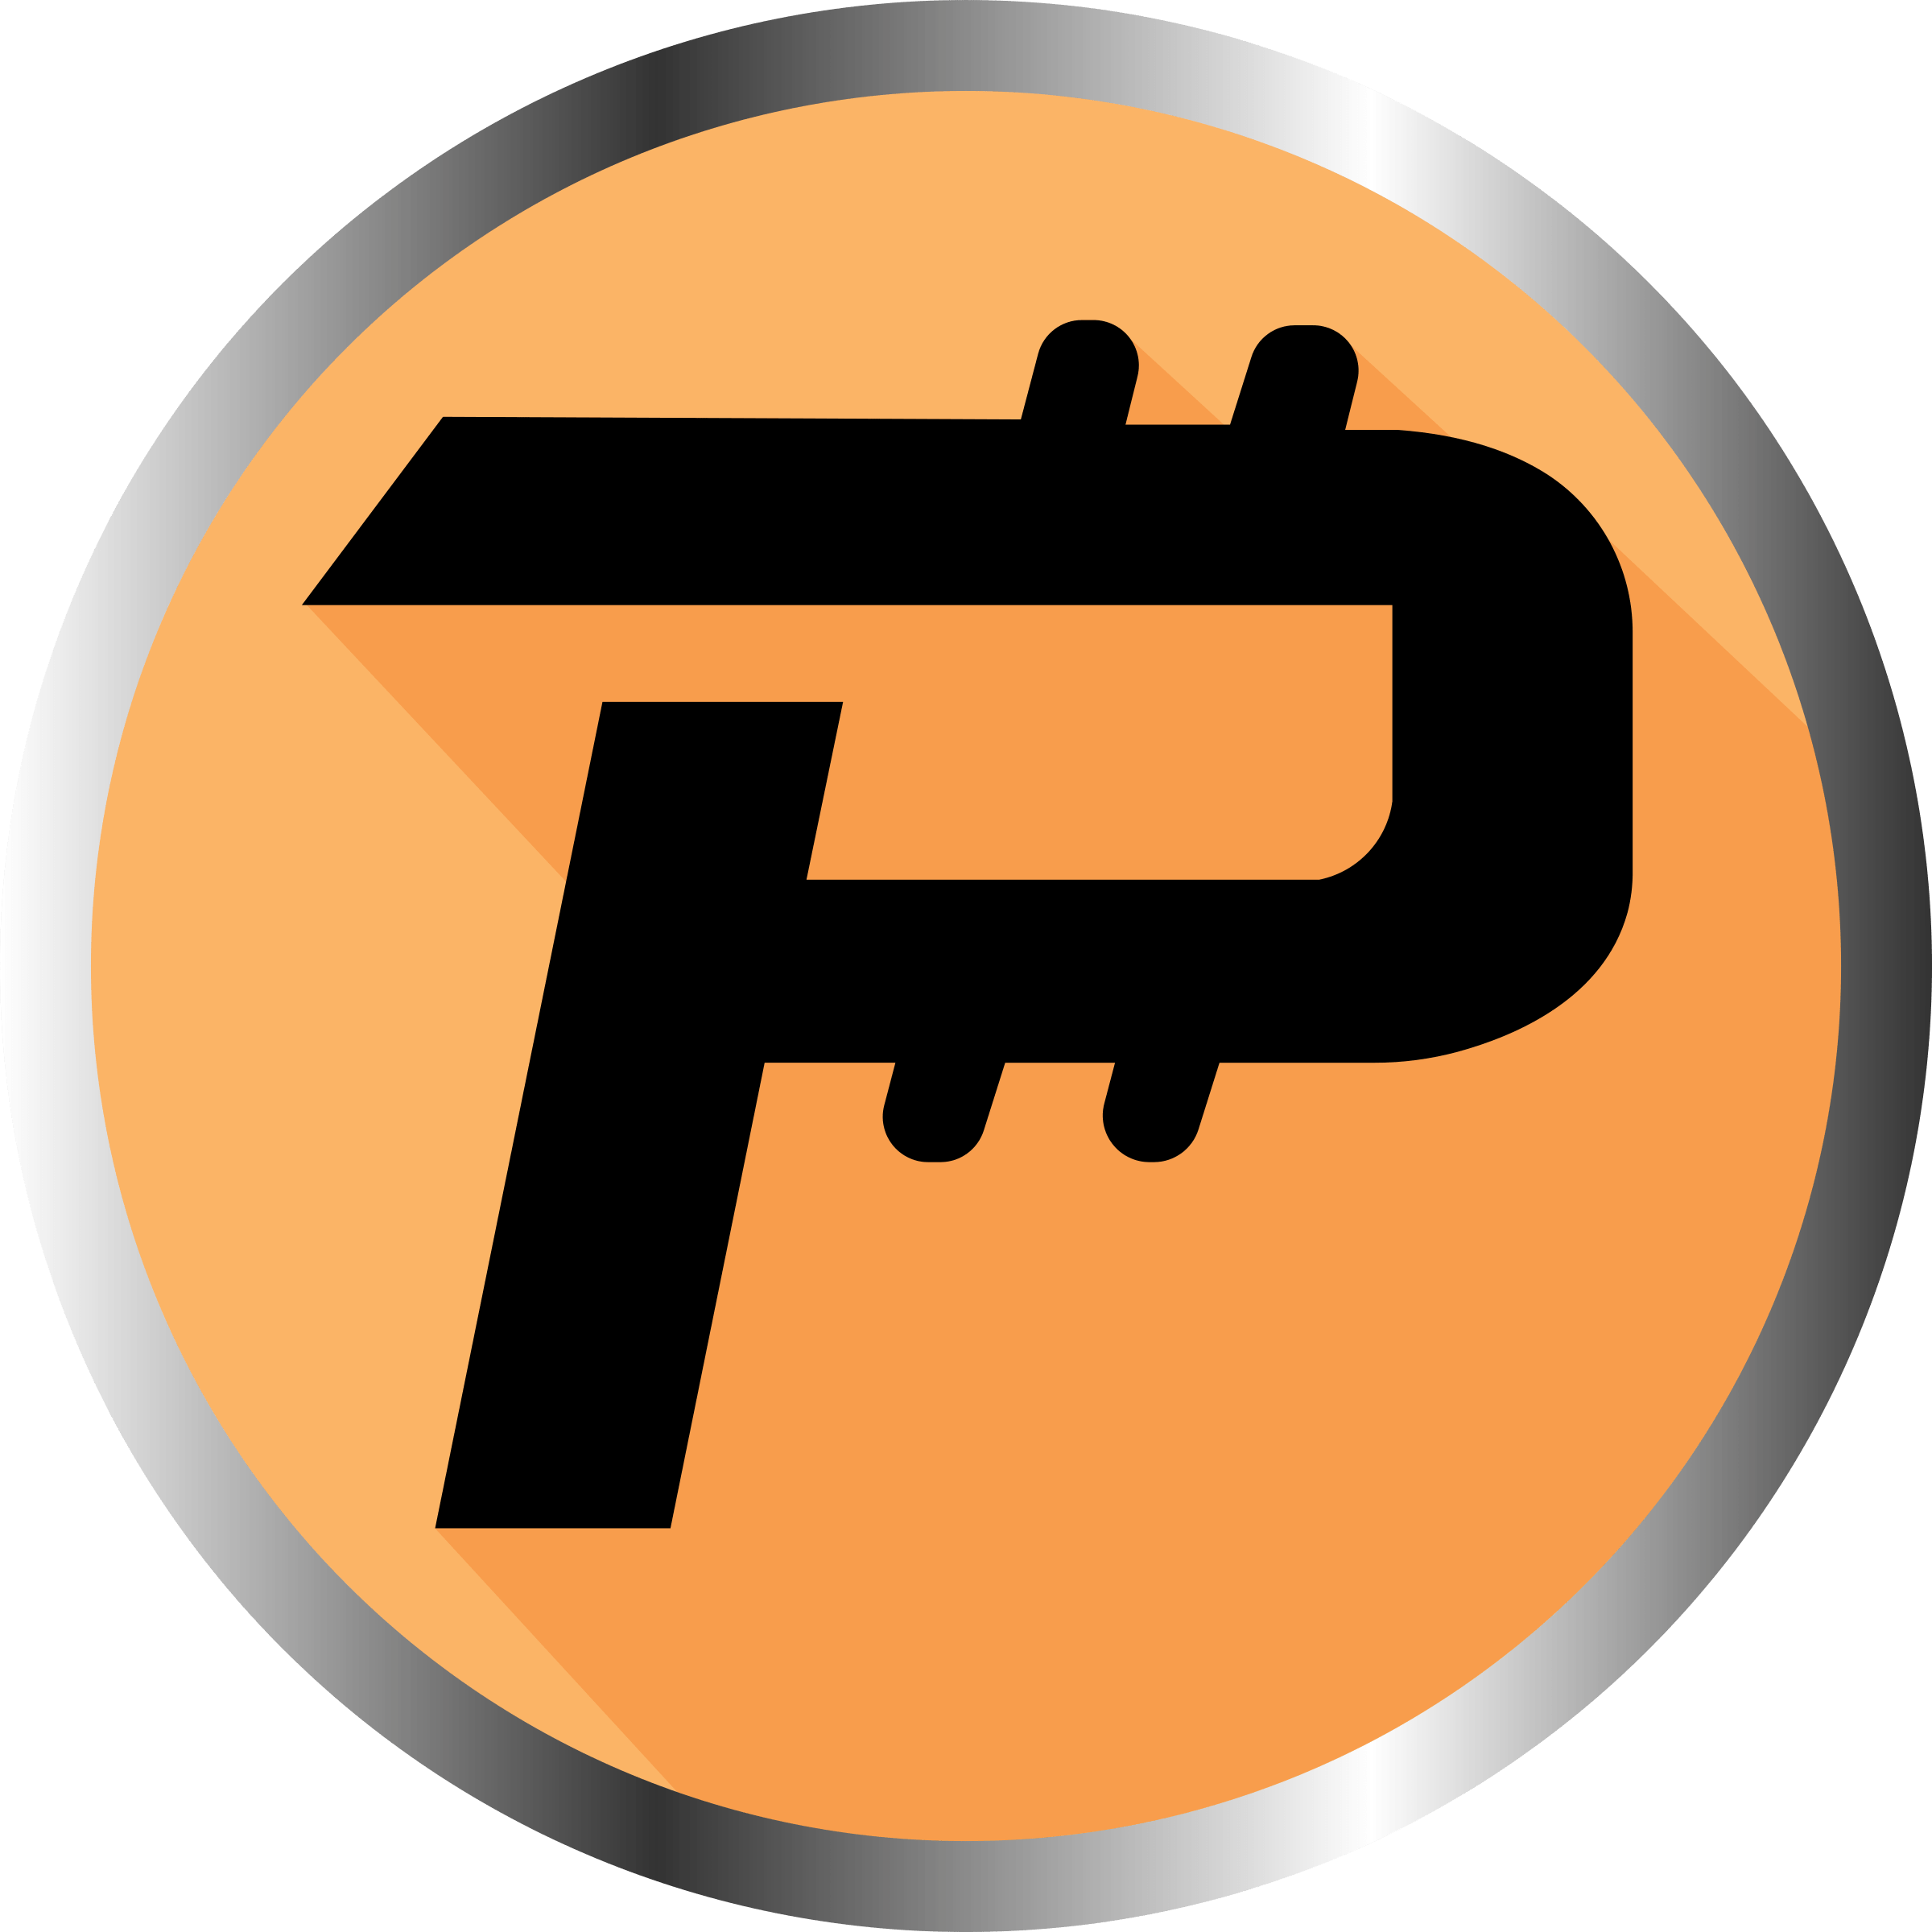 Pascal Logo - Pascal Coin Logo PNG Transparent & SVG Vector - Freebie Supply